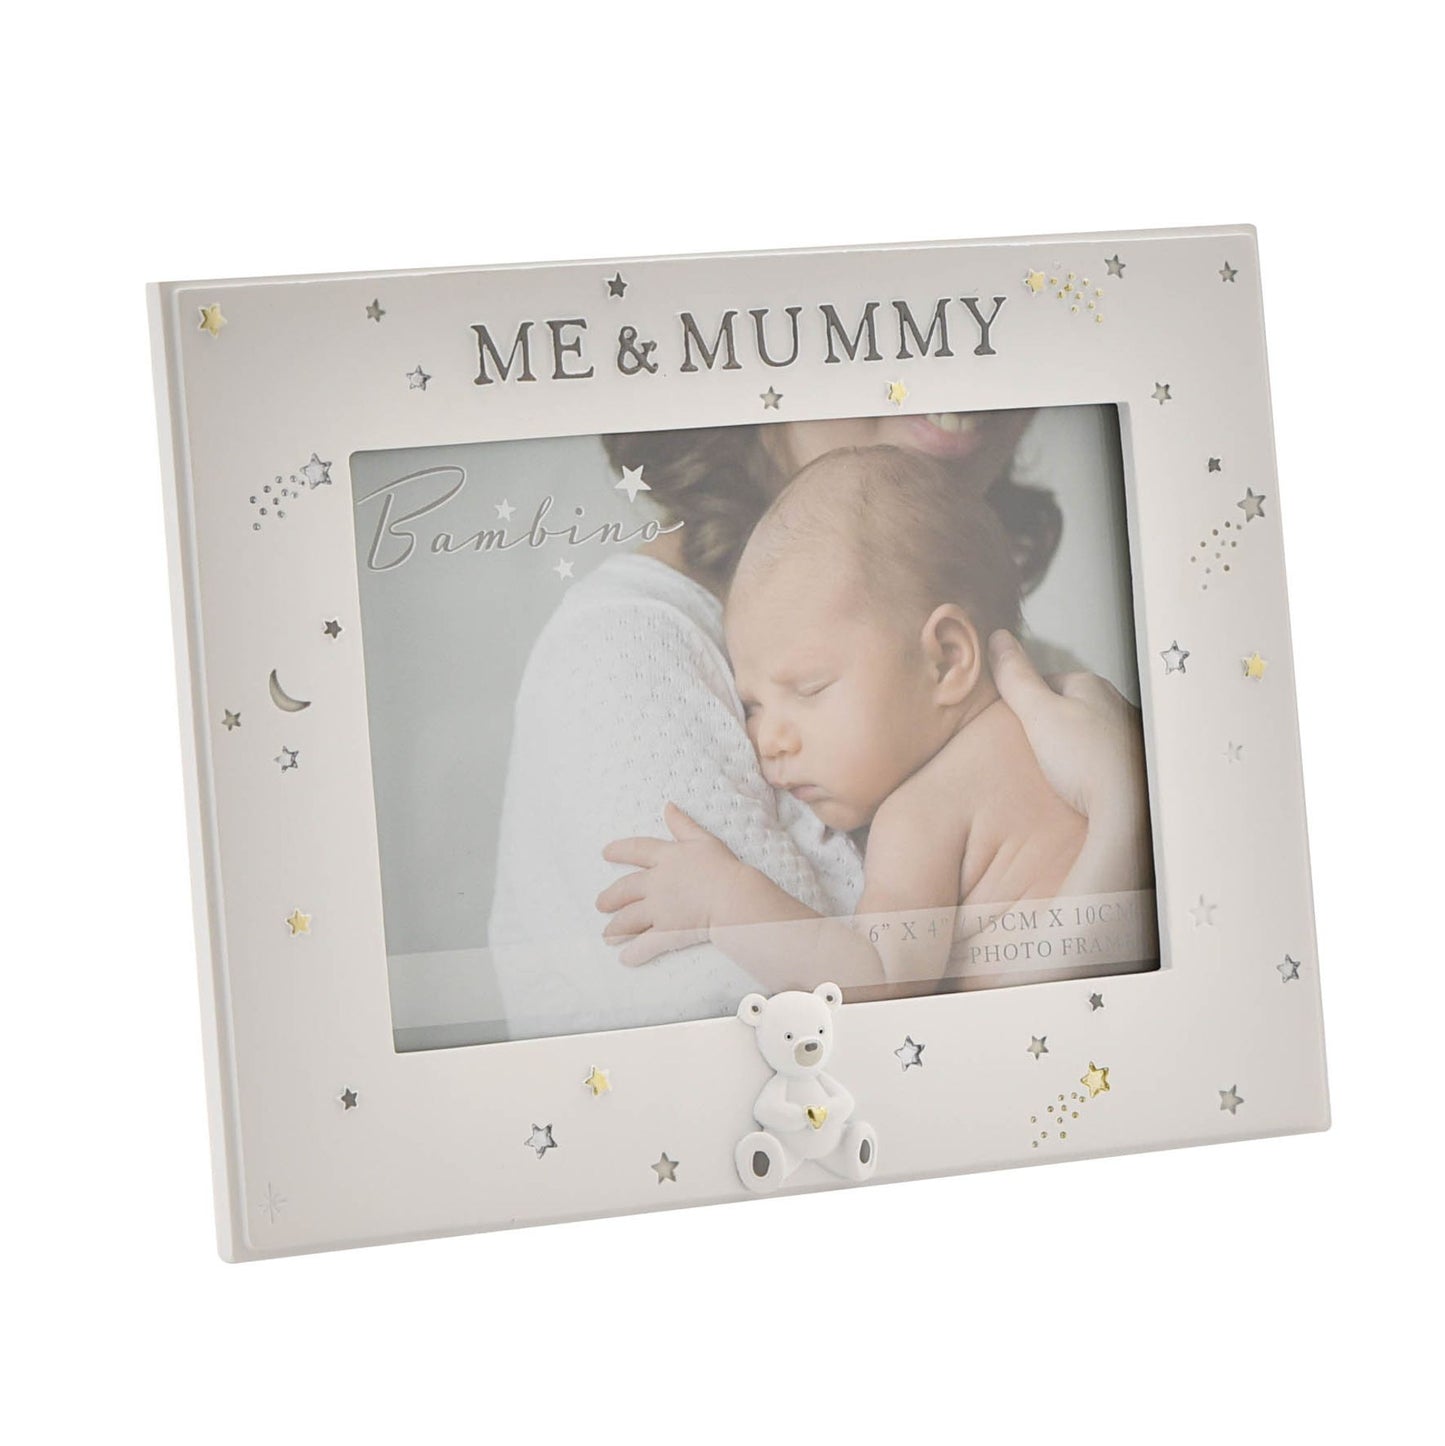 Widdop 6" x 4" - Bambino Resin Mummy & Me Photo Frame